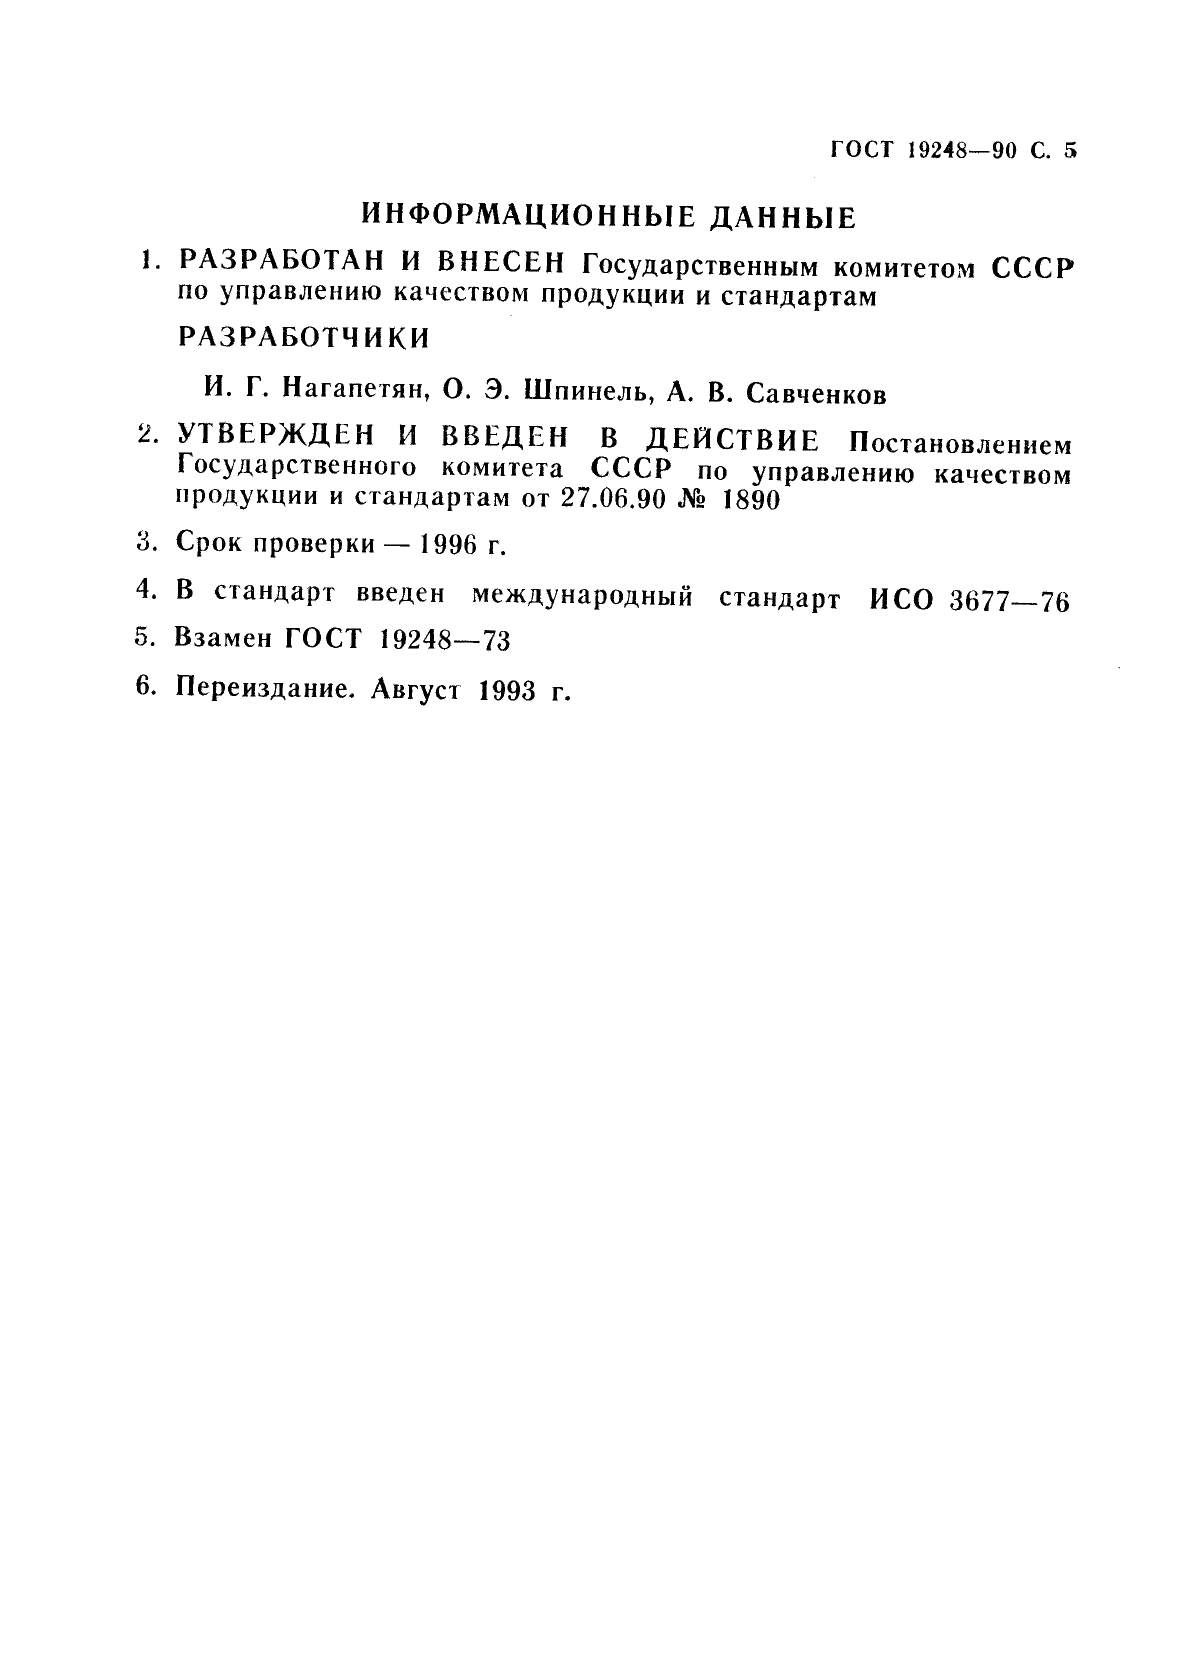 ГОСТ 19248-90 Припои. Классификация и обозначения (фото 6 из 7)